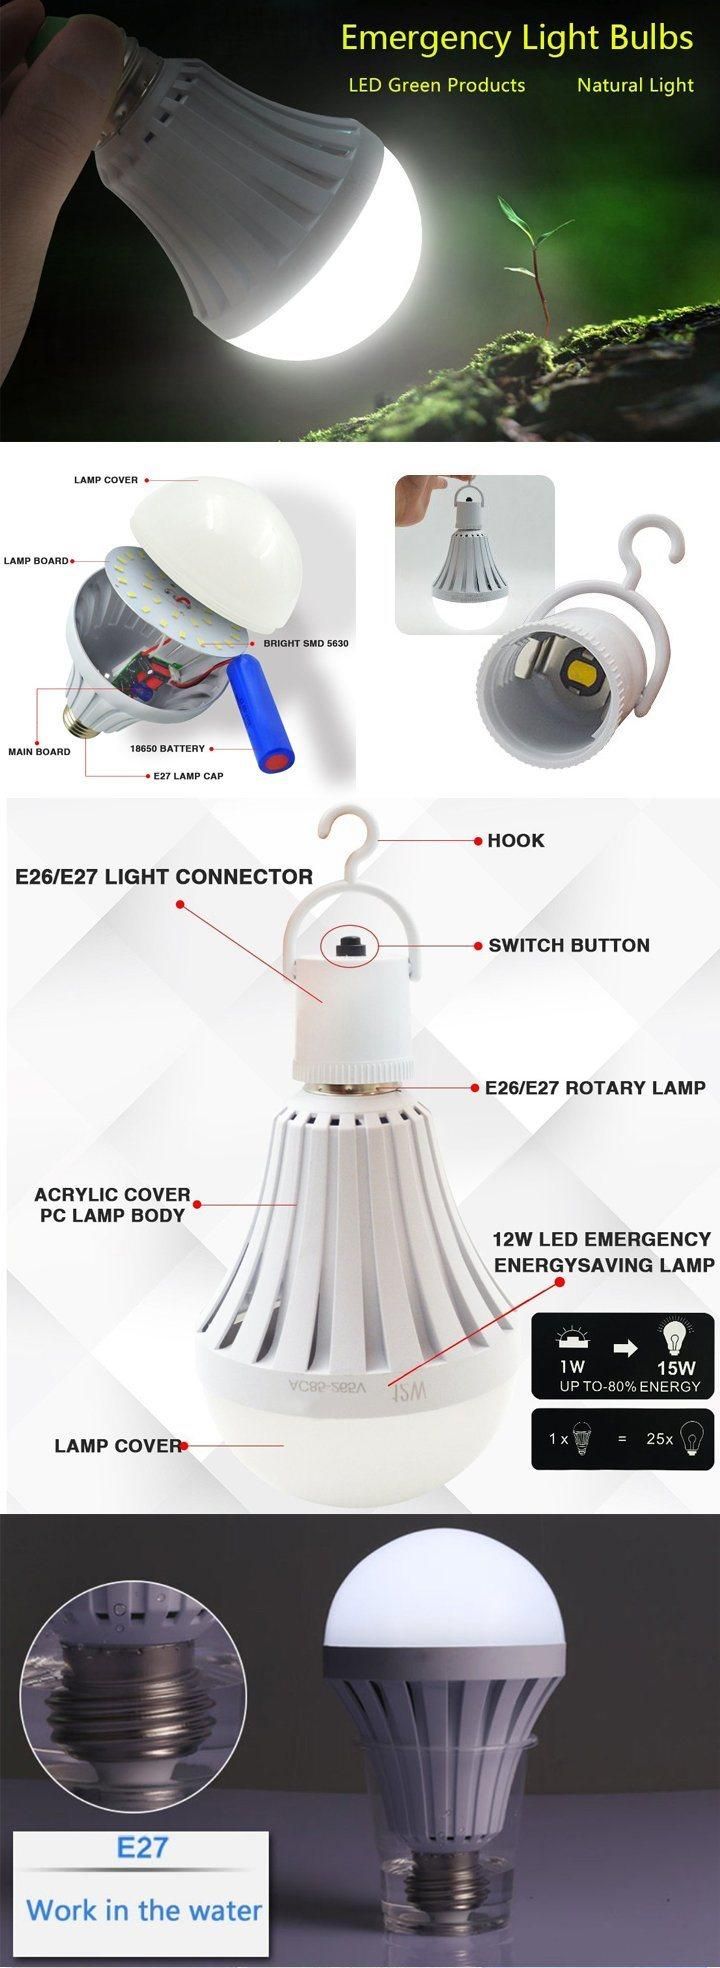 1200-4400mAh Battery E27 B22 LED Rechargeable Bulb 5W 7W 9W 12W 15W Emergency Bulb with Backup Battery